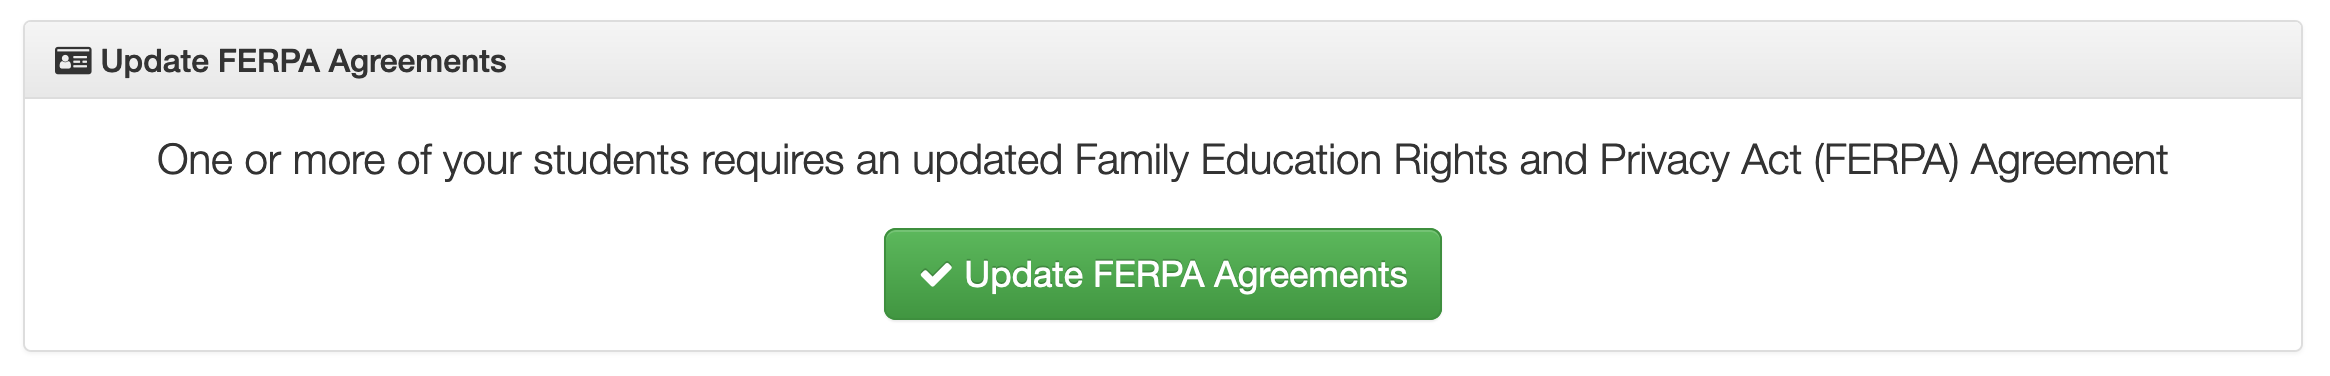 FERPA parent dashboard task